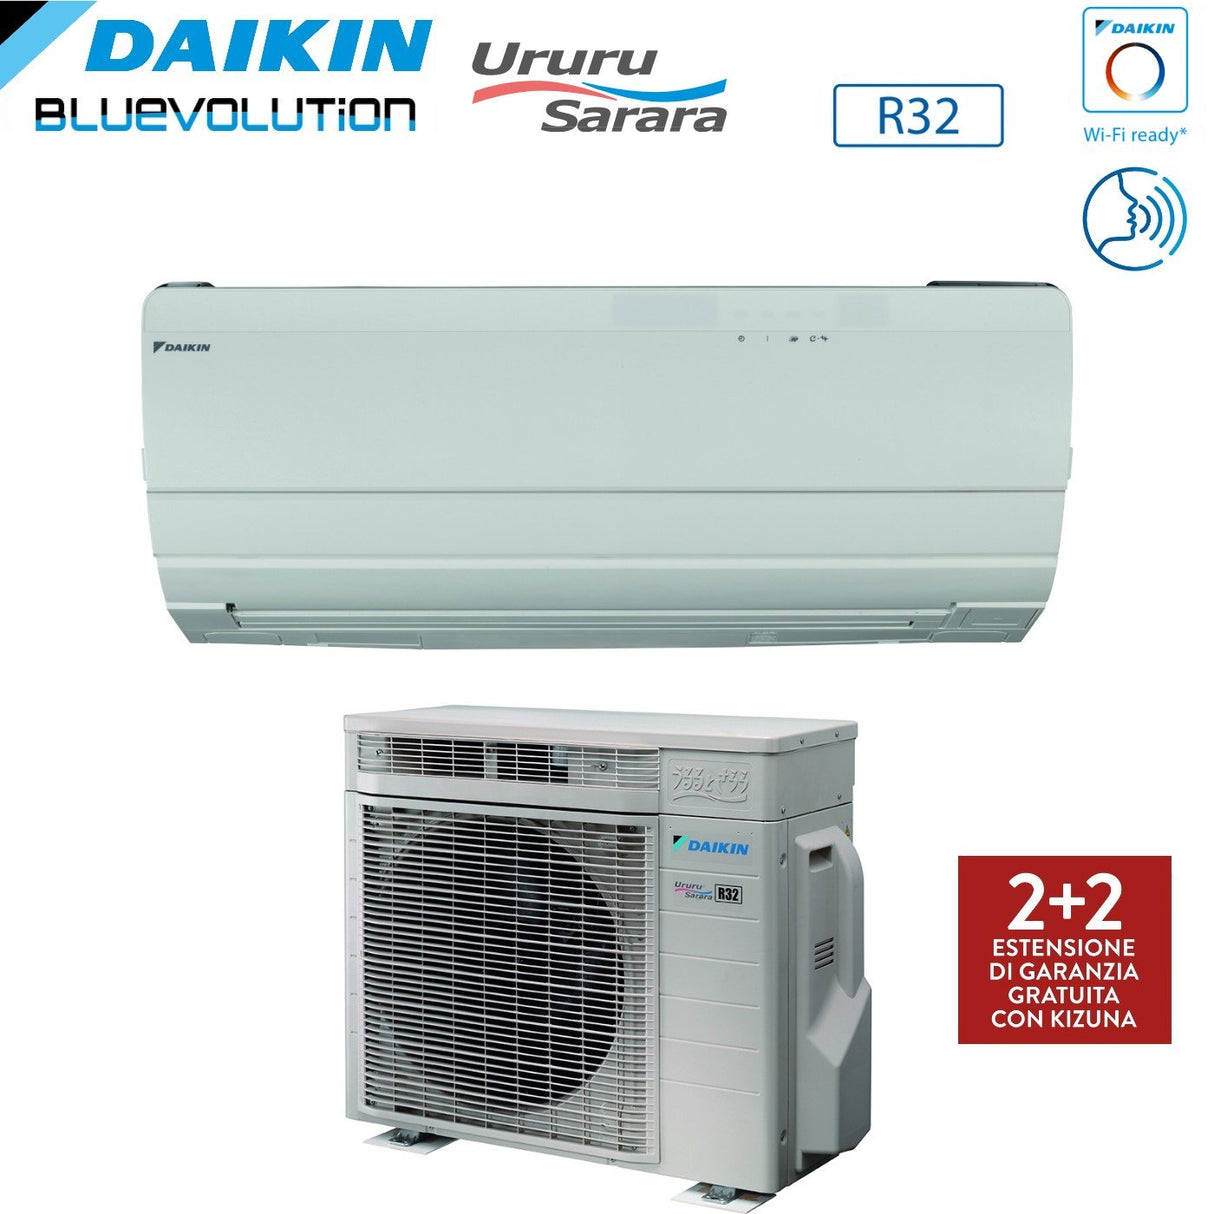 immagine-6-daikin-climatizzatore-condizionatore-daikin-bluevolution-inverter-serie-ururu-sarara-12000-btu-ftxz35n-r-32-wi-fi-optional-classe-a-garanzia-italiana-ean-8059657000804